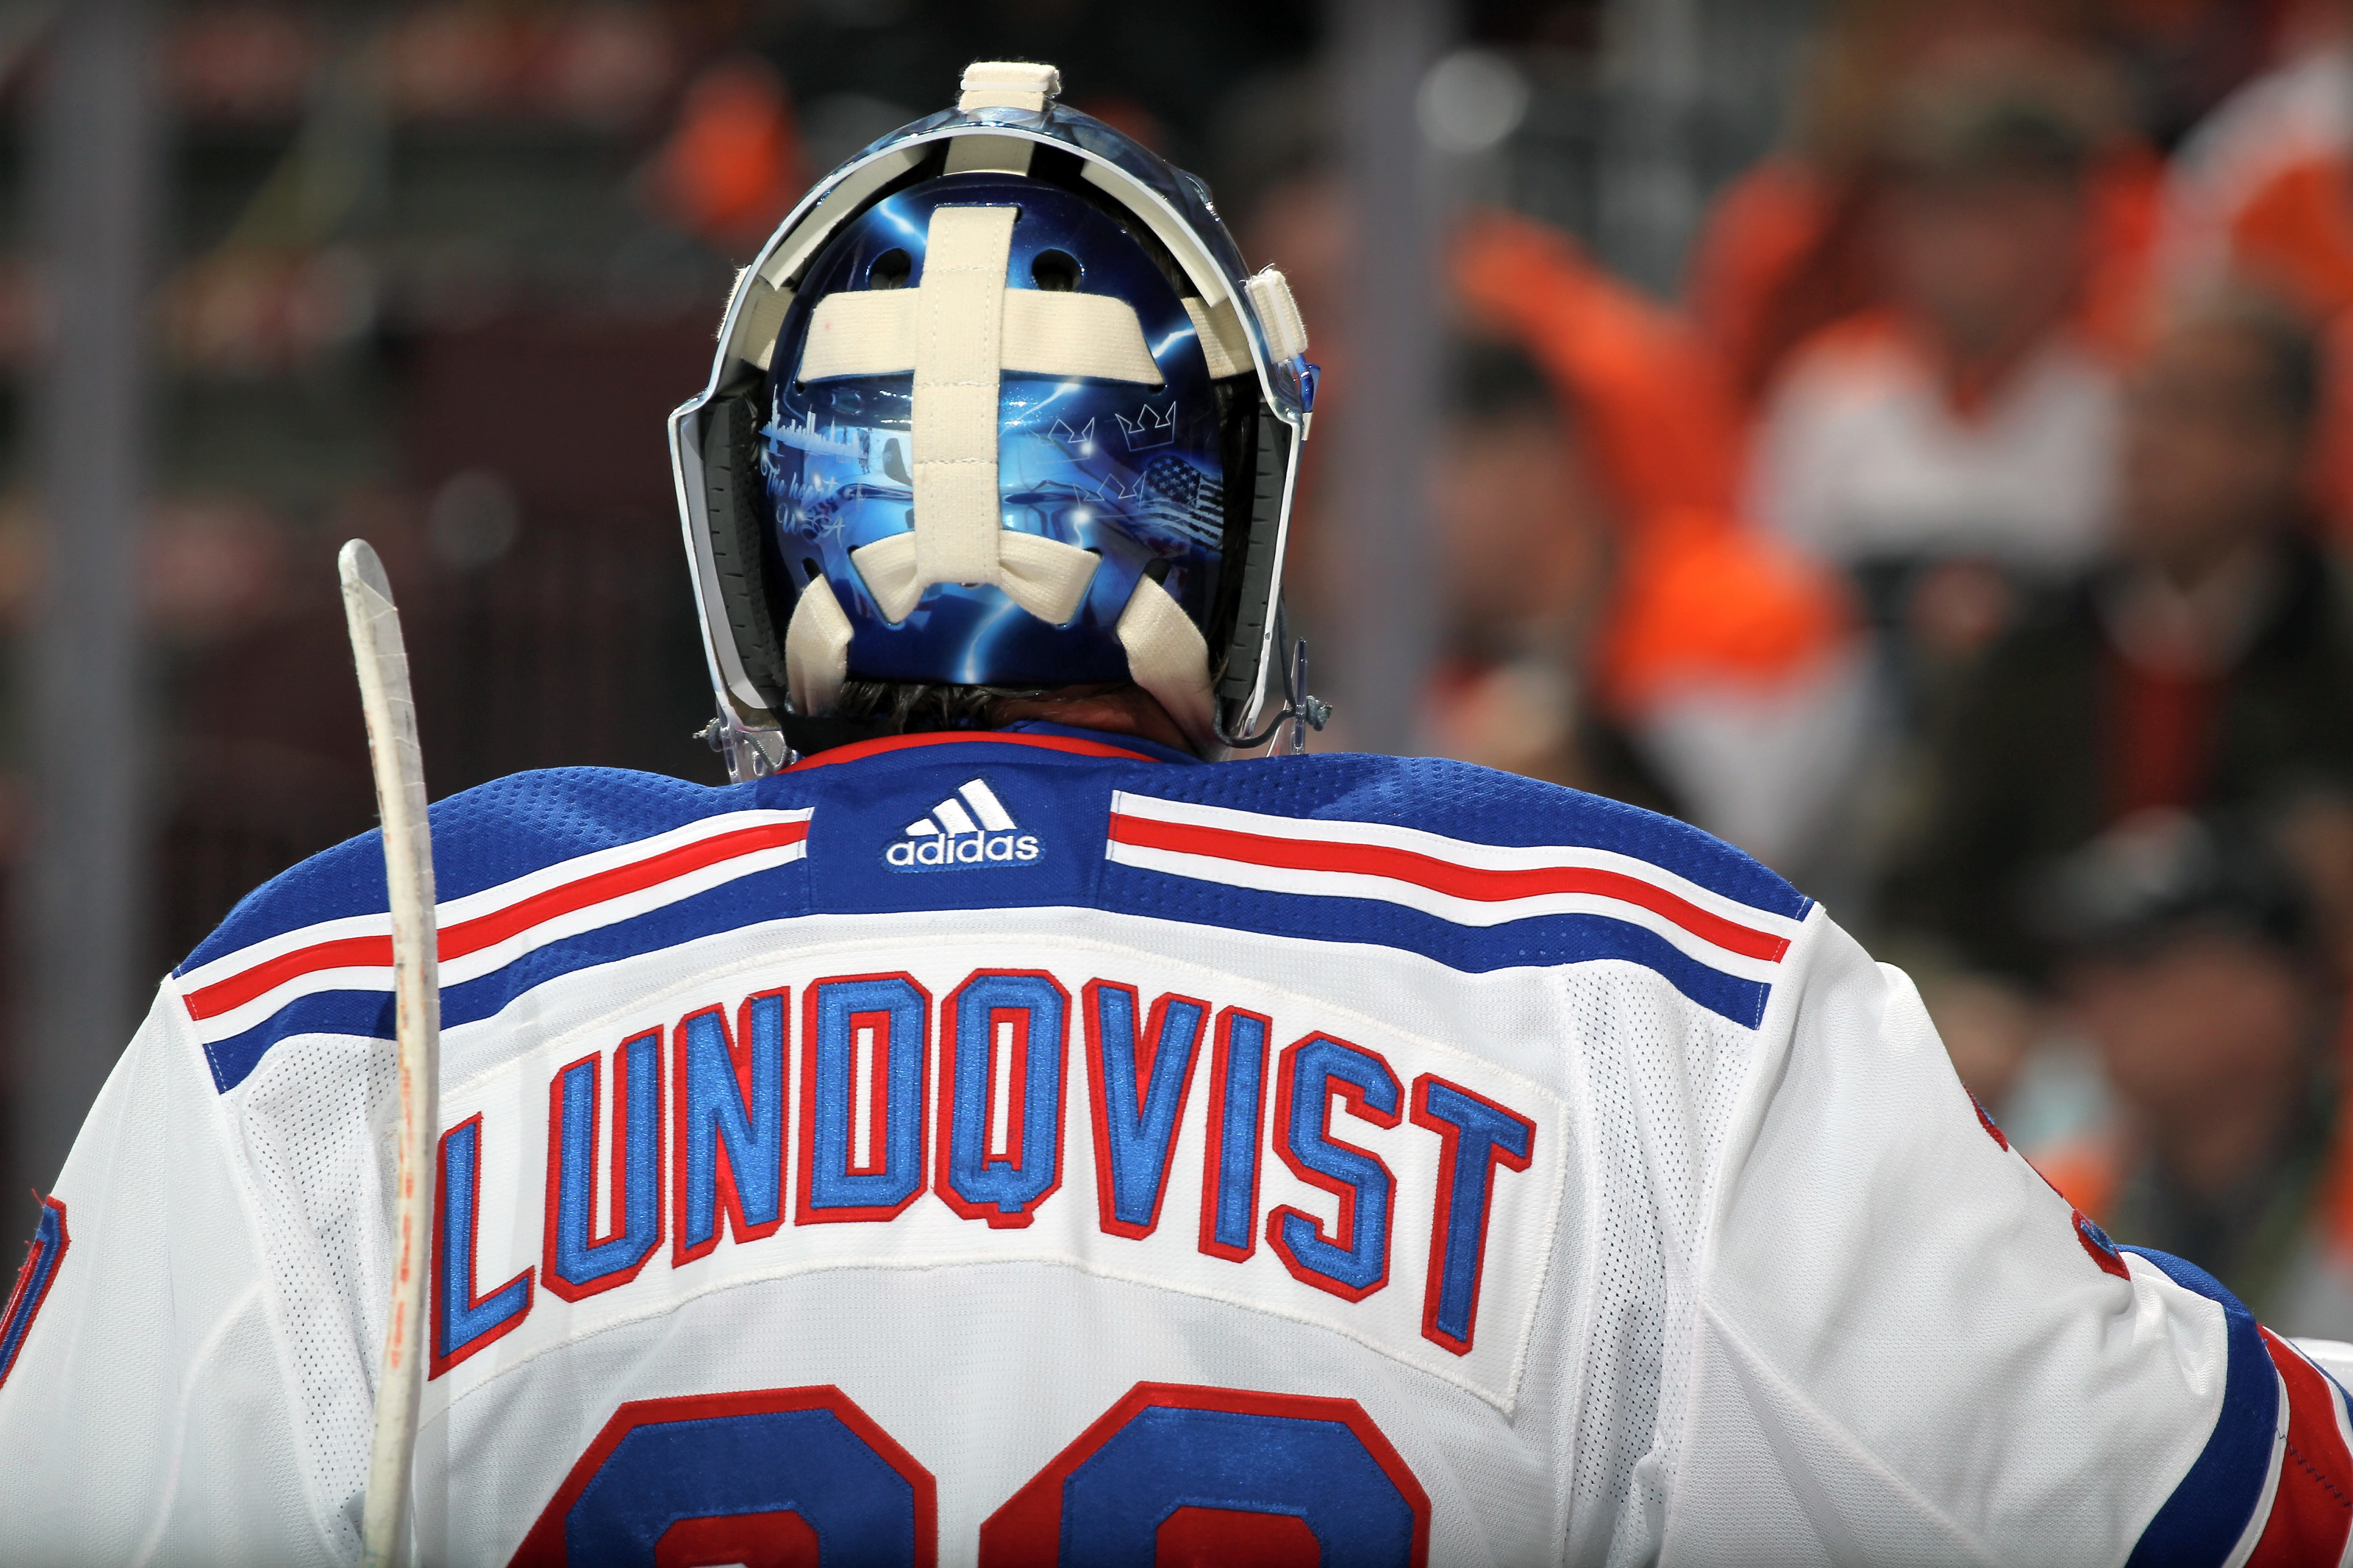 New York Rangers - Henrik Lundqvist 